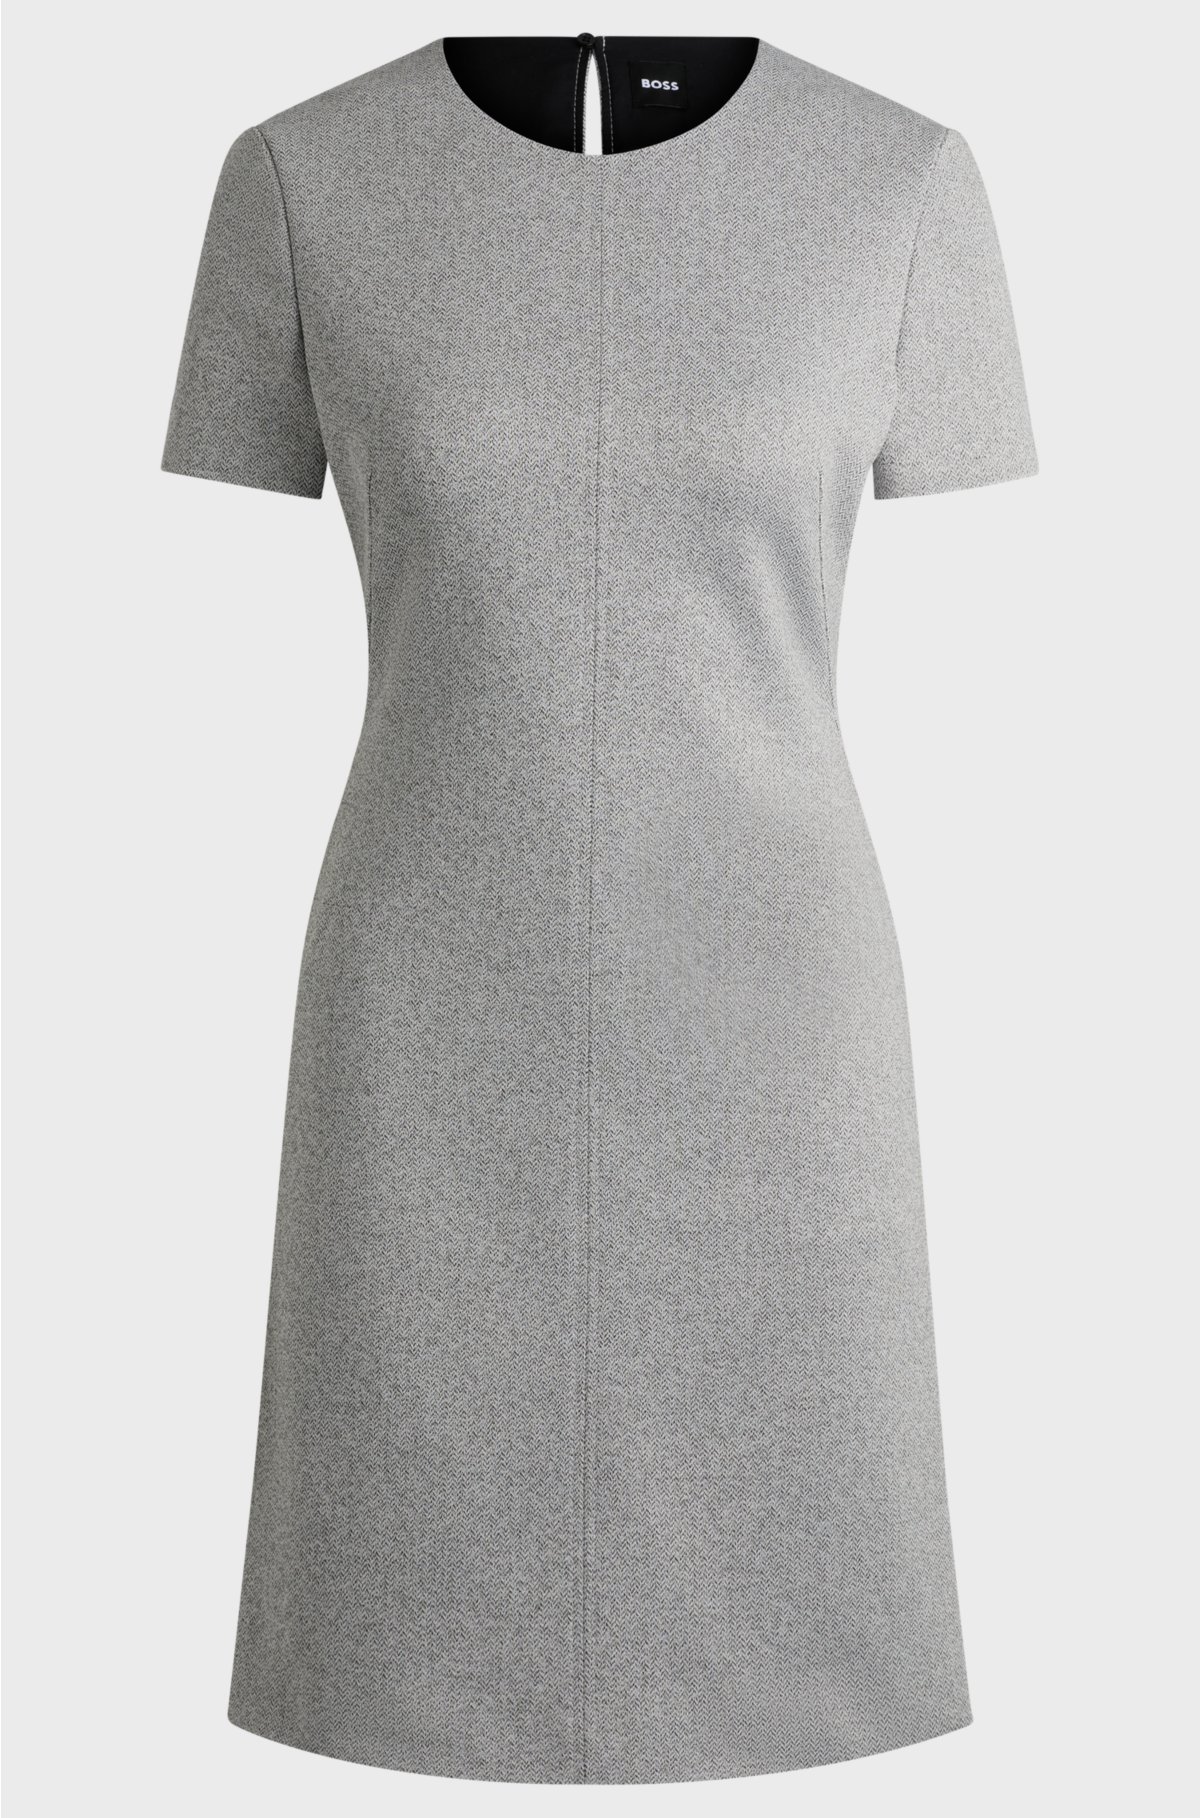 Short-sleeved dress in herringbone jersey, Light Grey